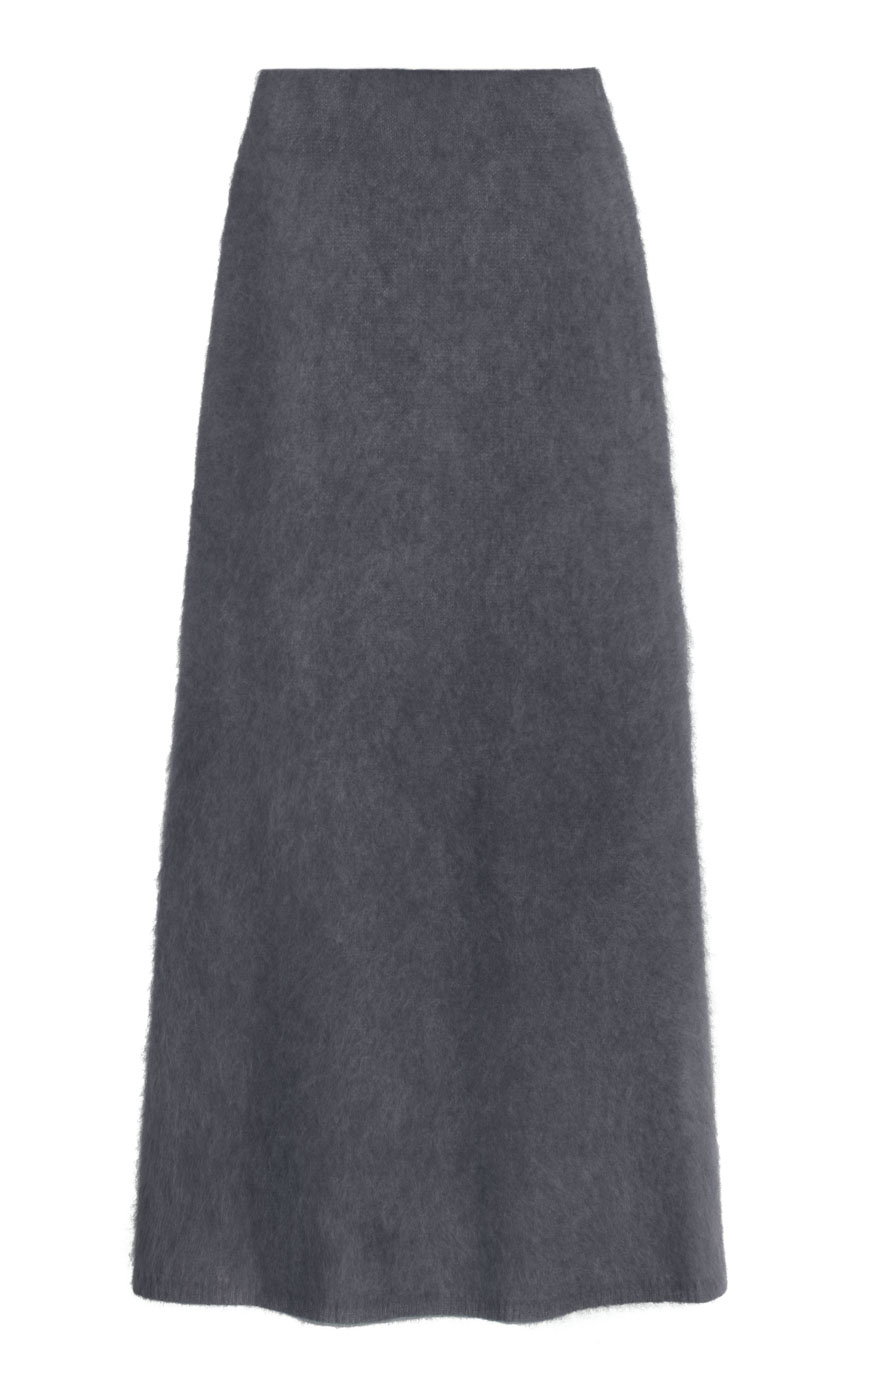 28 Lisa Yang Asta Brushed Cashmere Midi Skirt $910 Net A Porter.com